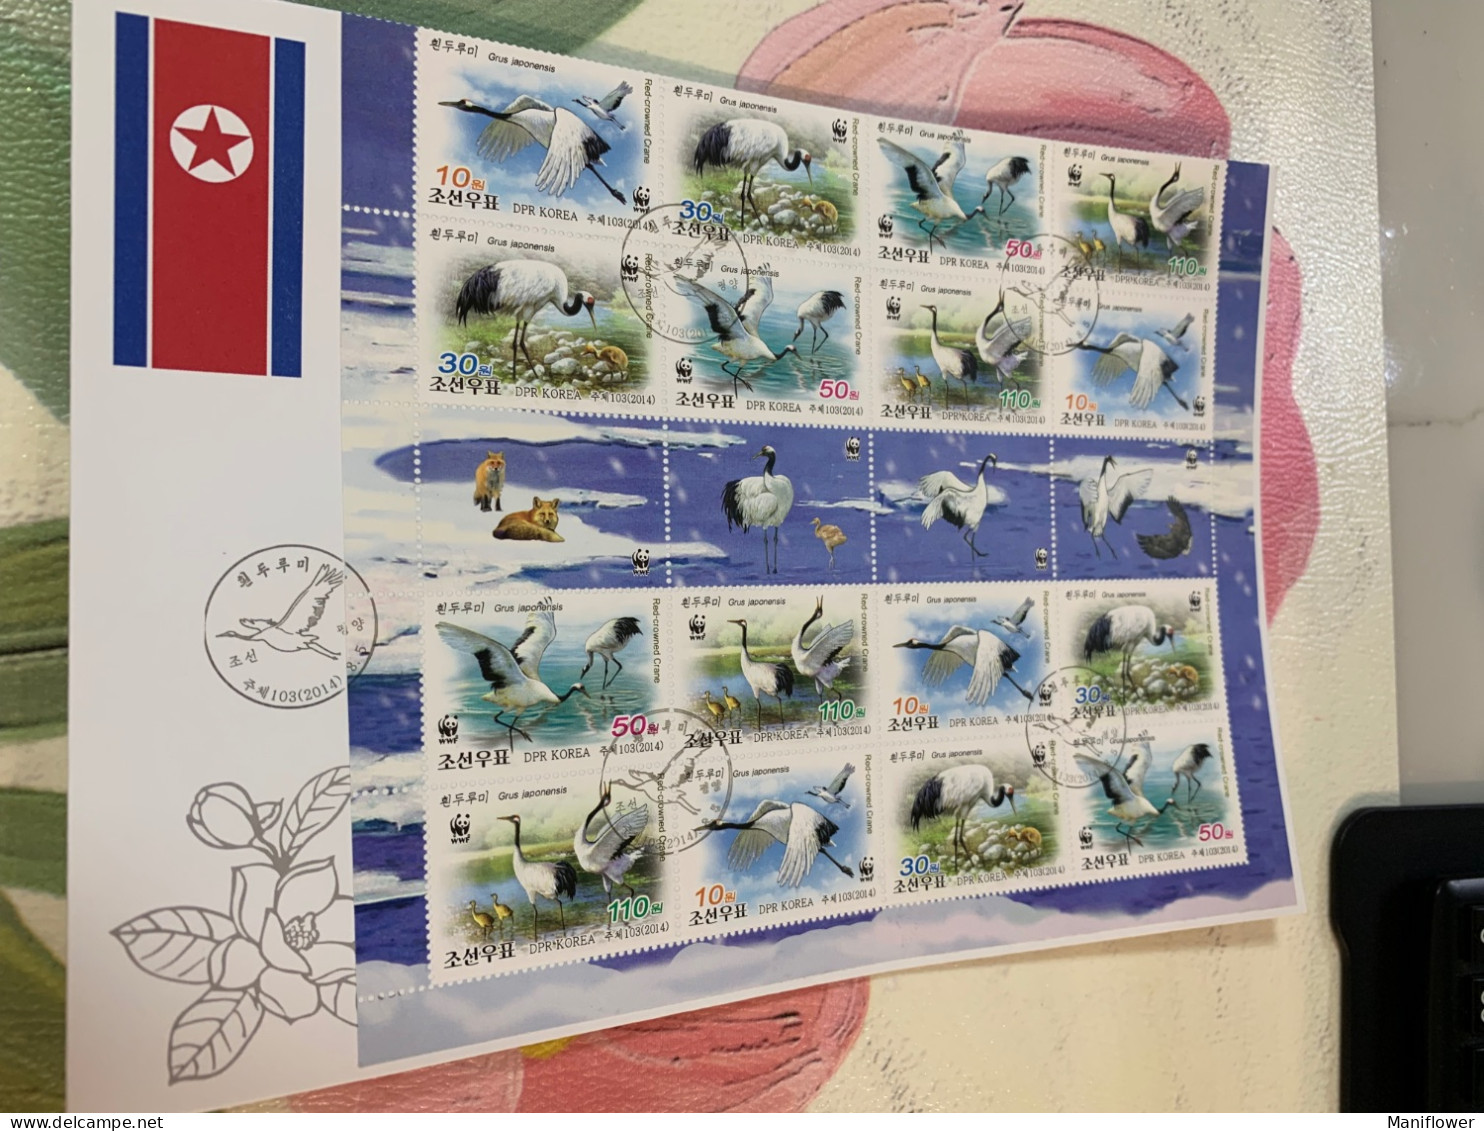 Korea Stamp 2014 Perf Whole Sheet Cranes Birds Wetland WWF FDC - Korea, North